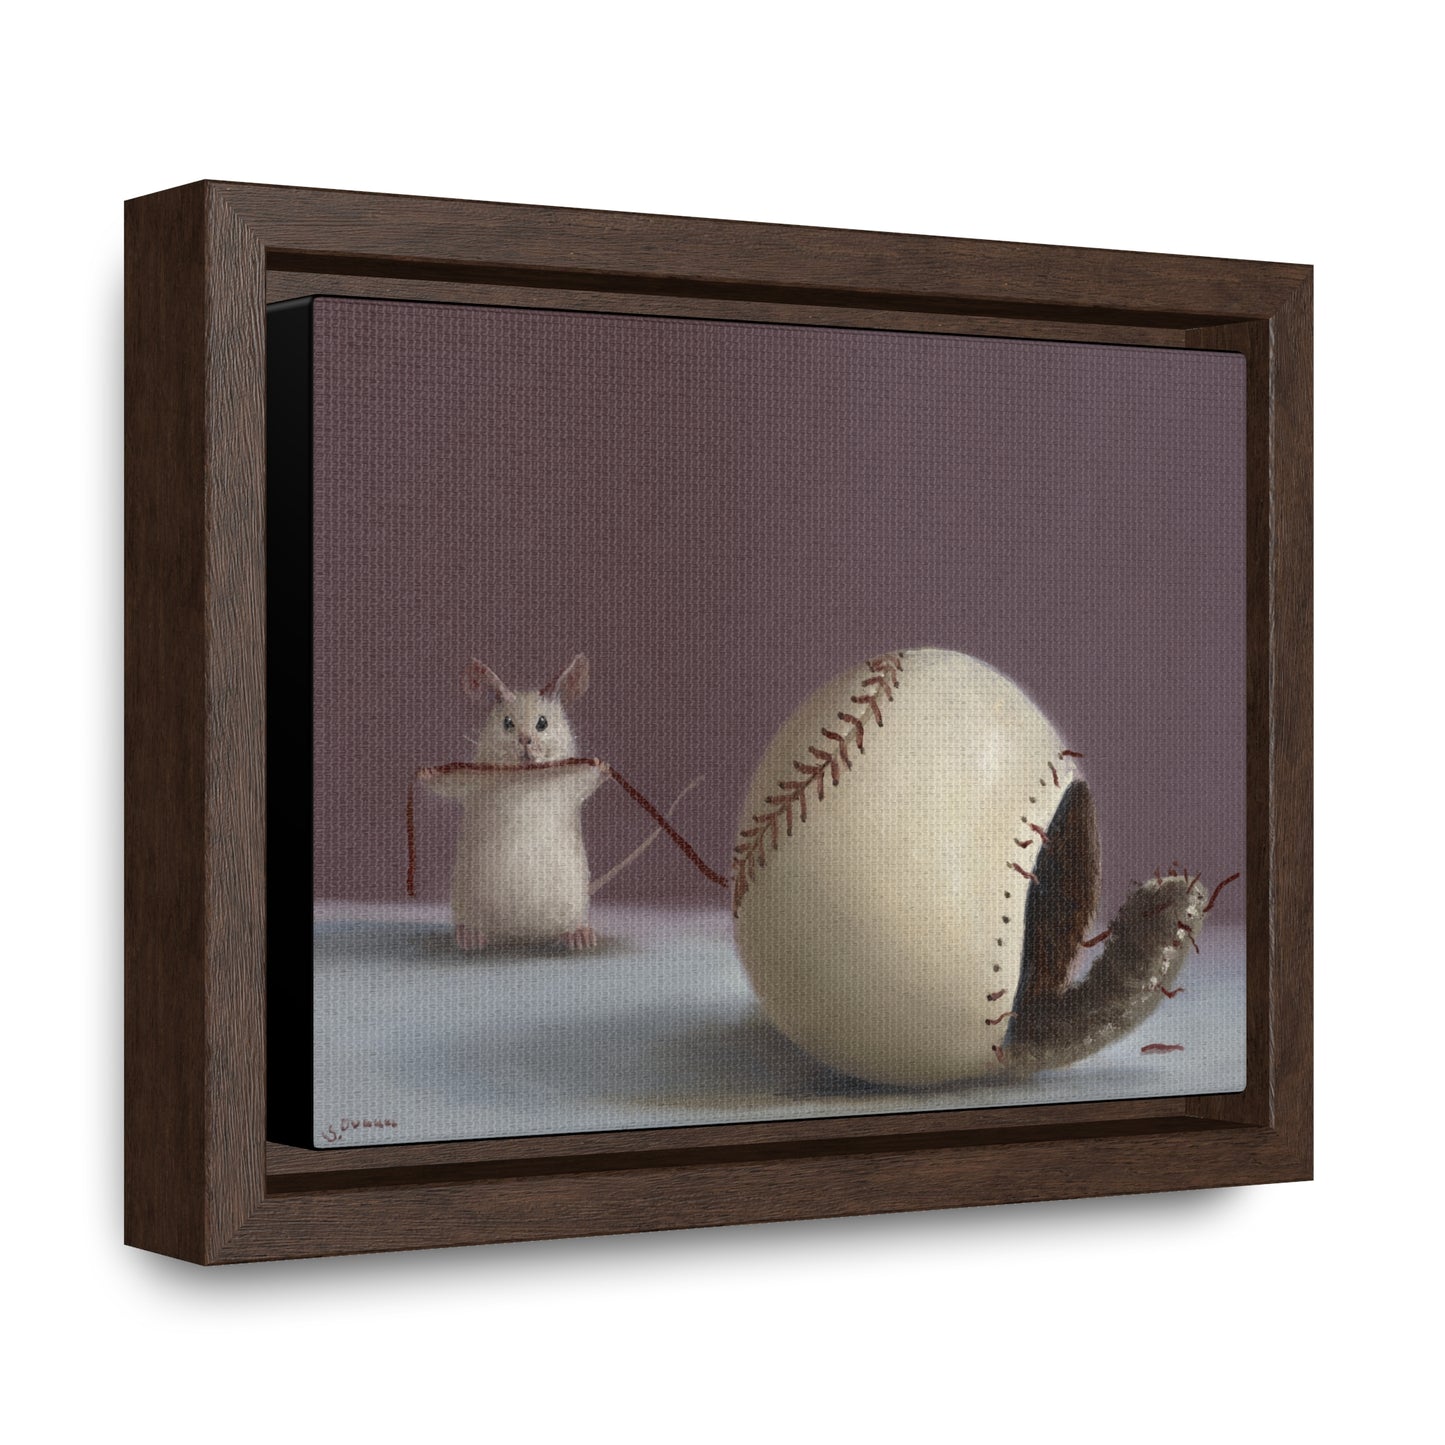 Stuart Dunkel: "Playing Hardball" - Framed Canvas Reproduction